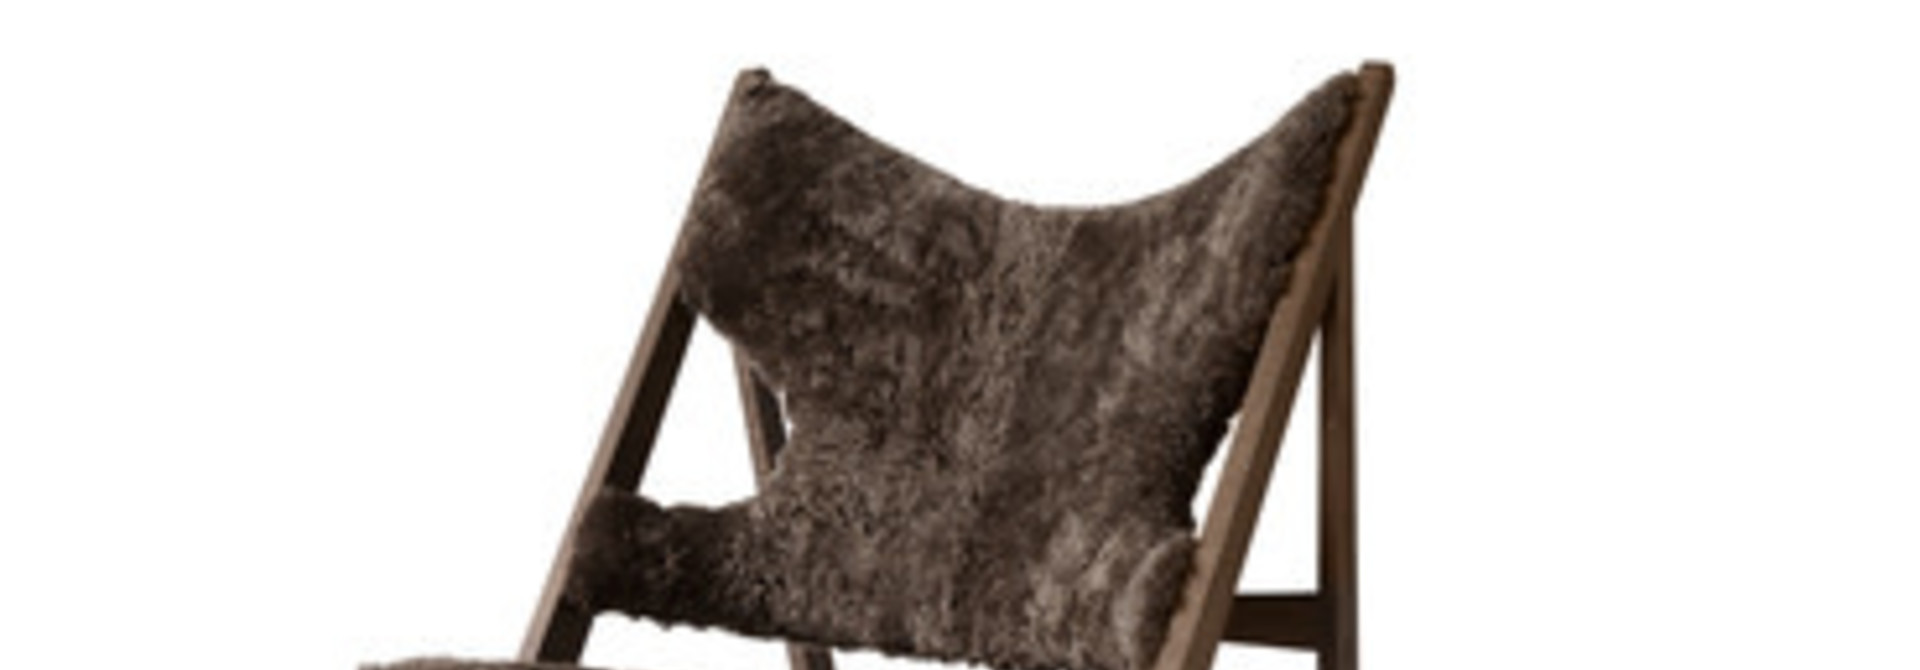 Knitting Lounge chair - Sheepskin